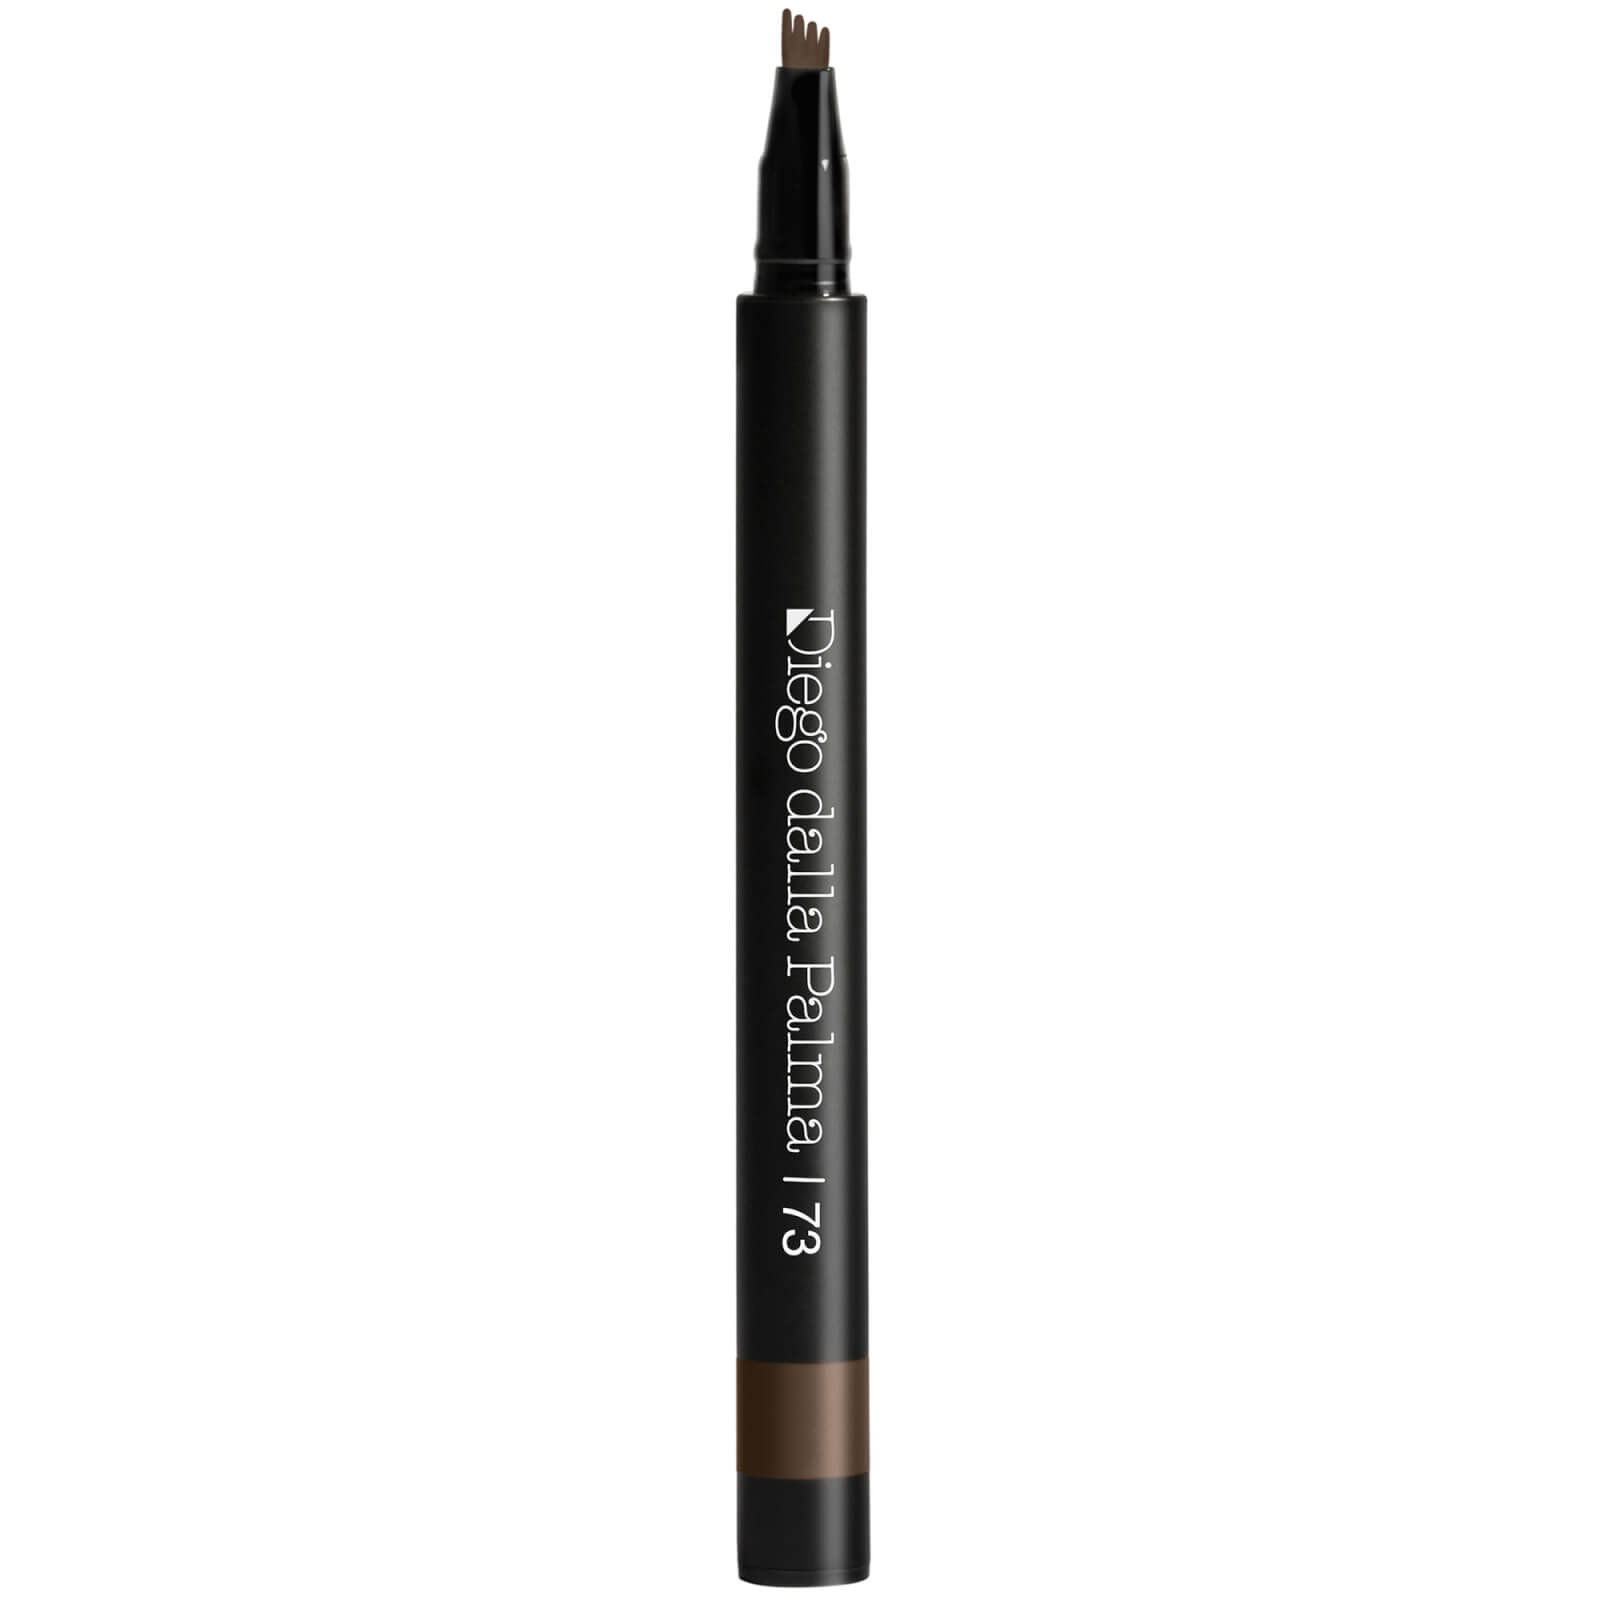 Diego Dalla Palma Microblading Eyebrow Pen 0.6g (various Shades) - 73